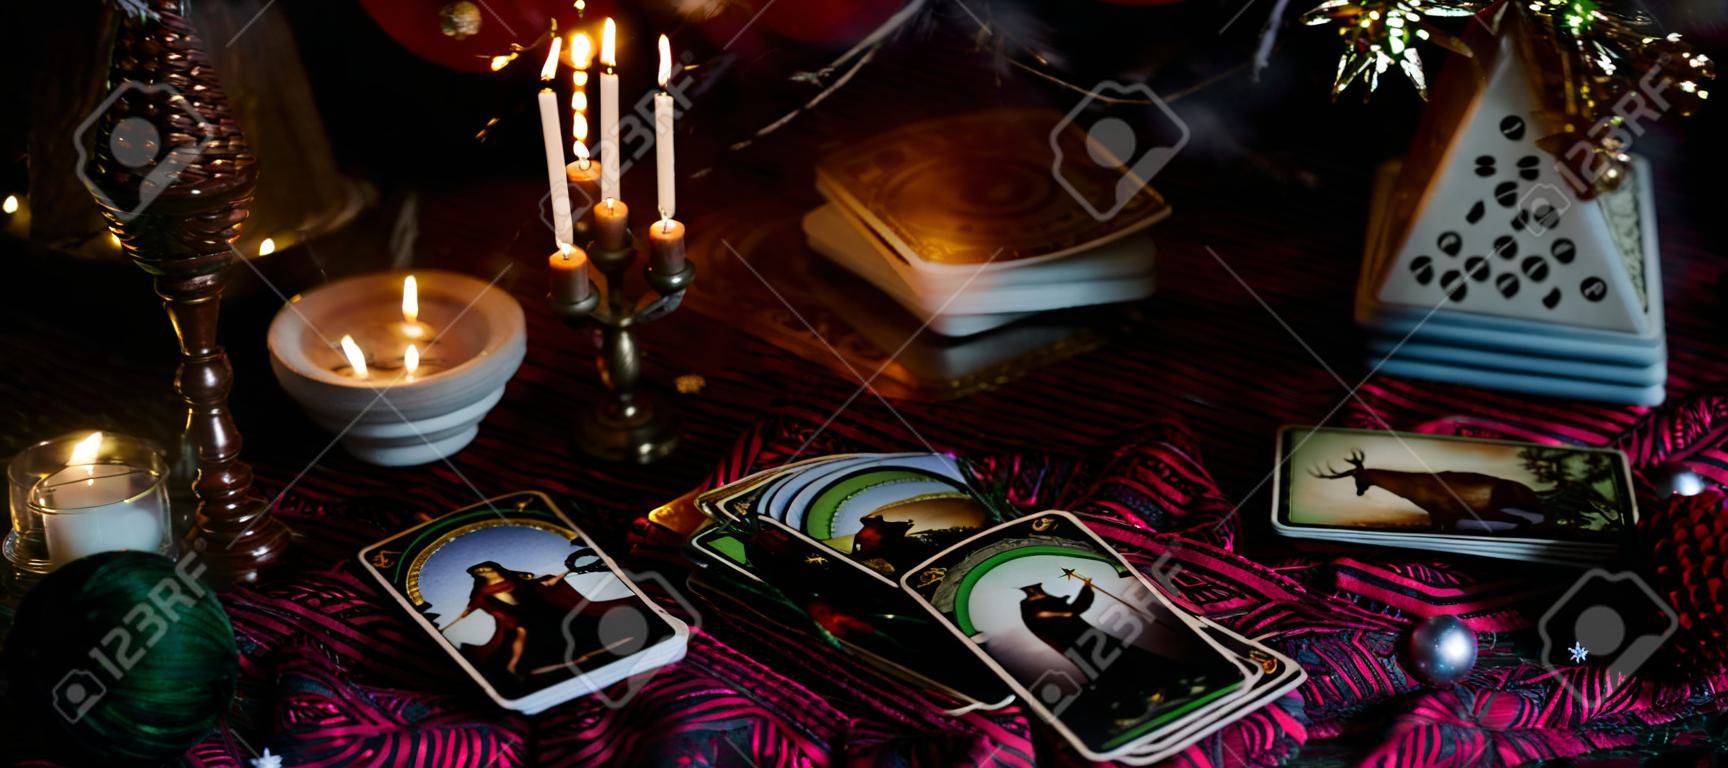 Winter prediction and magic rituals, Tarot cards. Magical concept